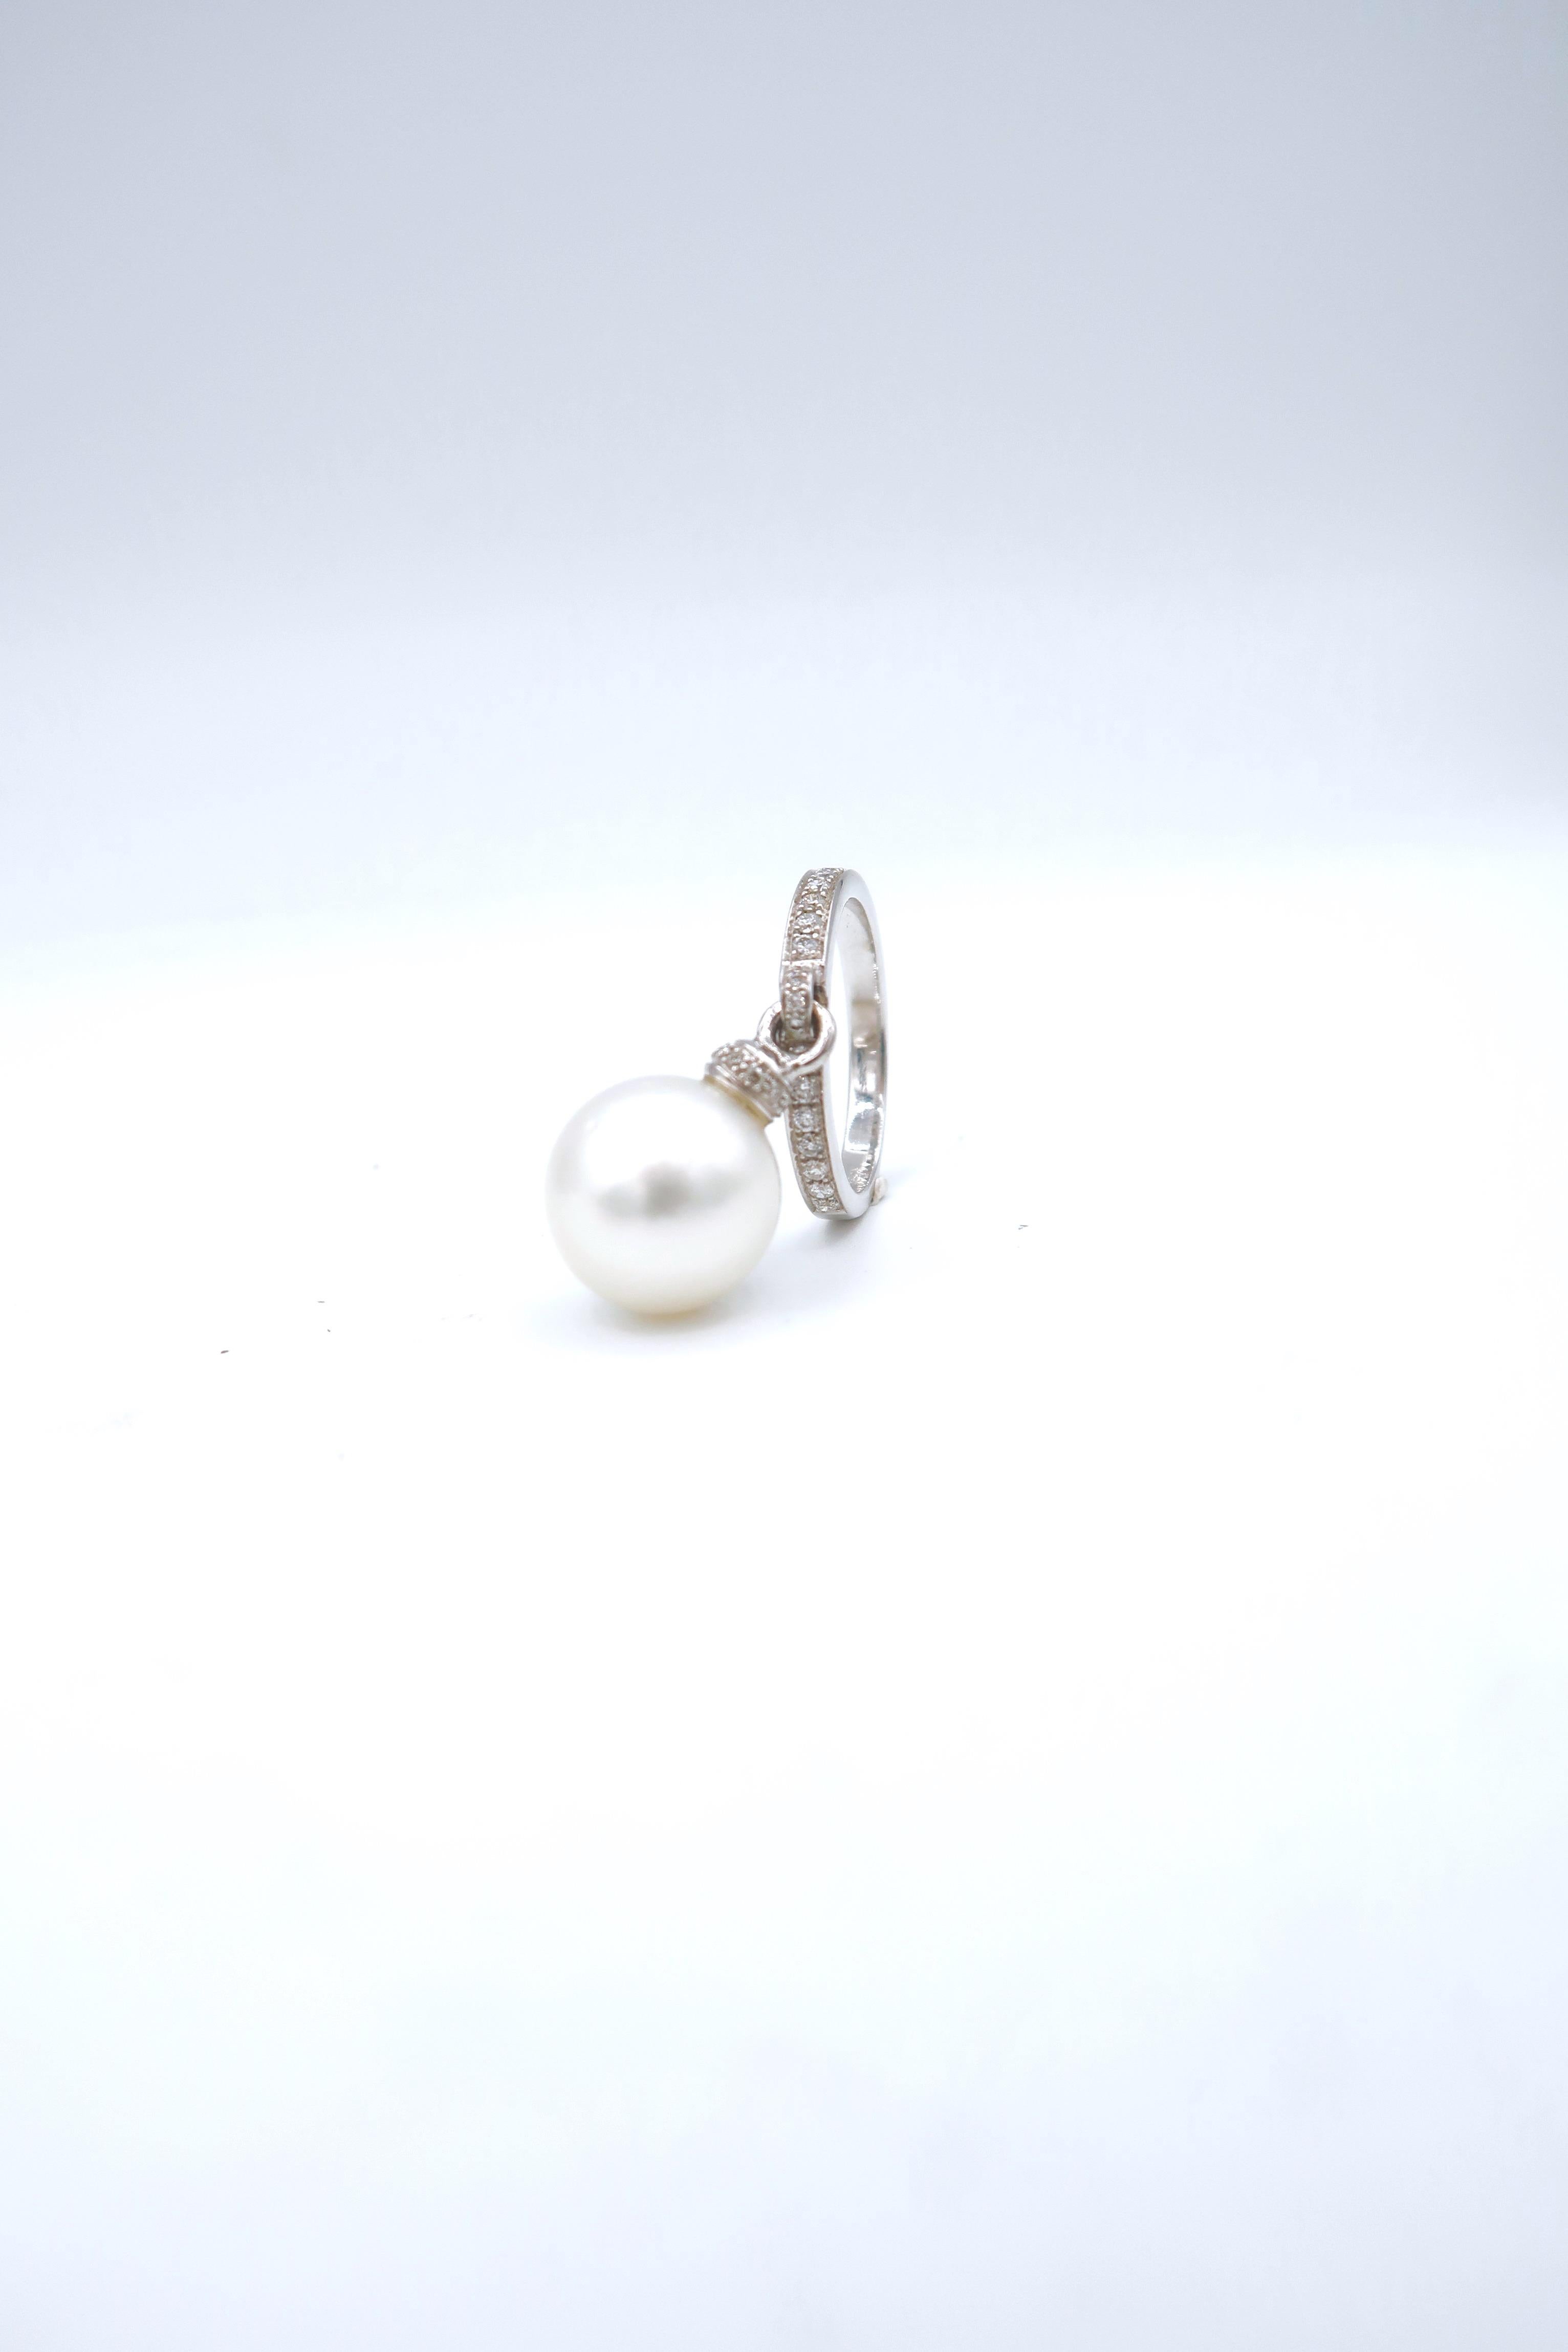 White South Sea Pearl Dangle Ring in 18K White Gold with Diamonds

Diamond: 0.25ct.
Gold: 18K White Gold 3.85g.
South Sea Pearl 1 pc.